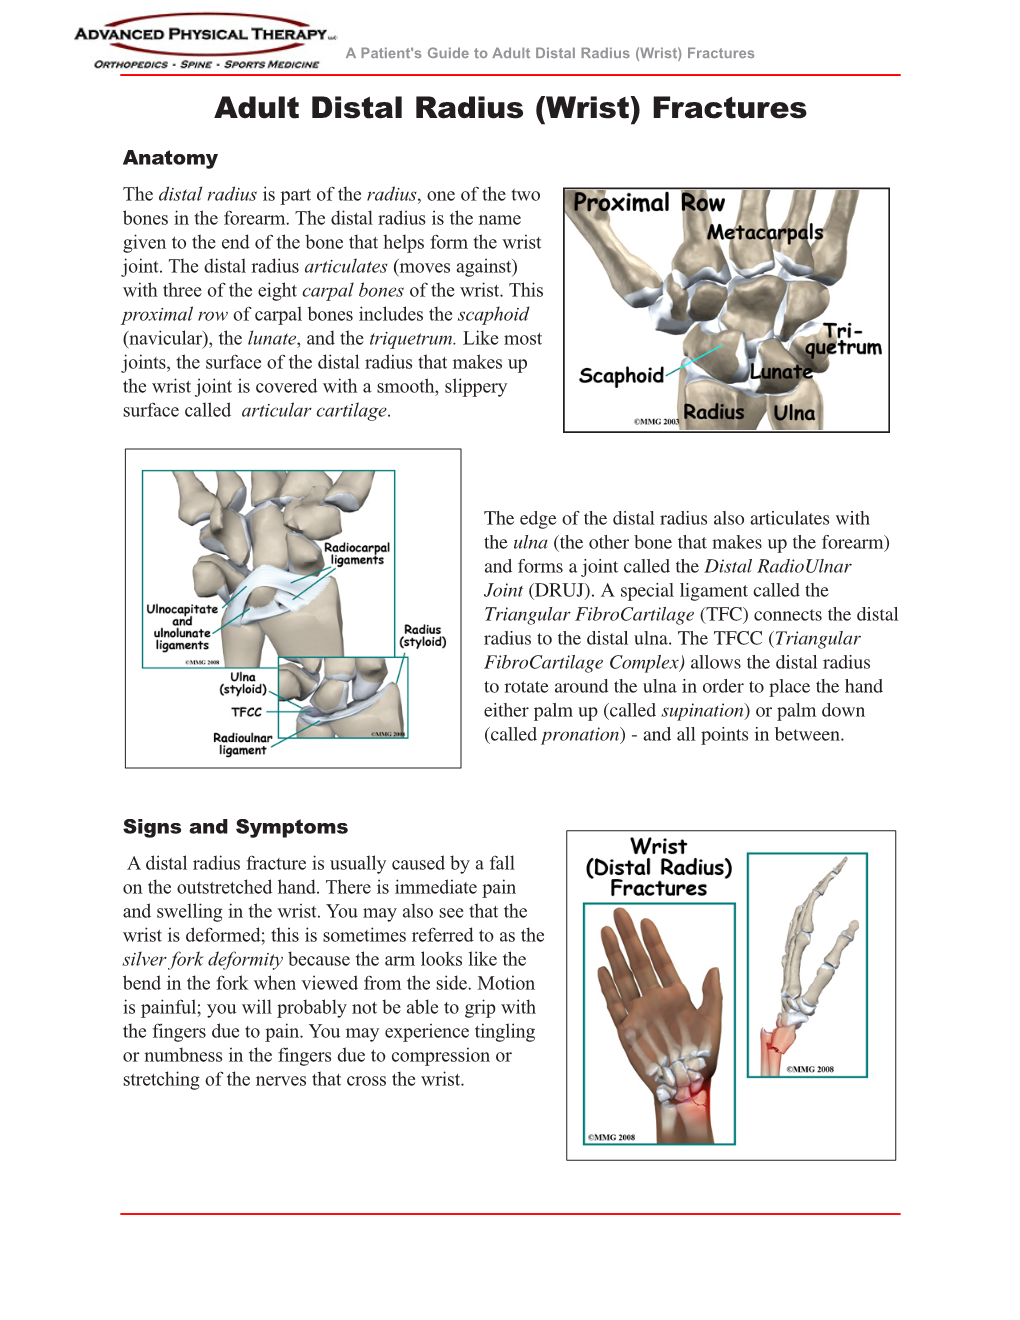 Adult Distal Radius (Wrist) Fractures